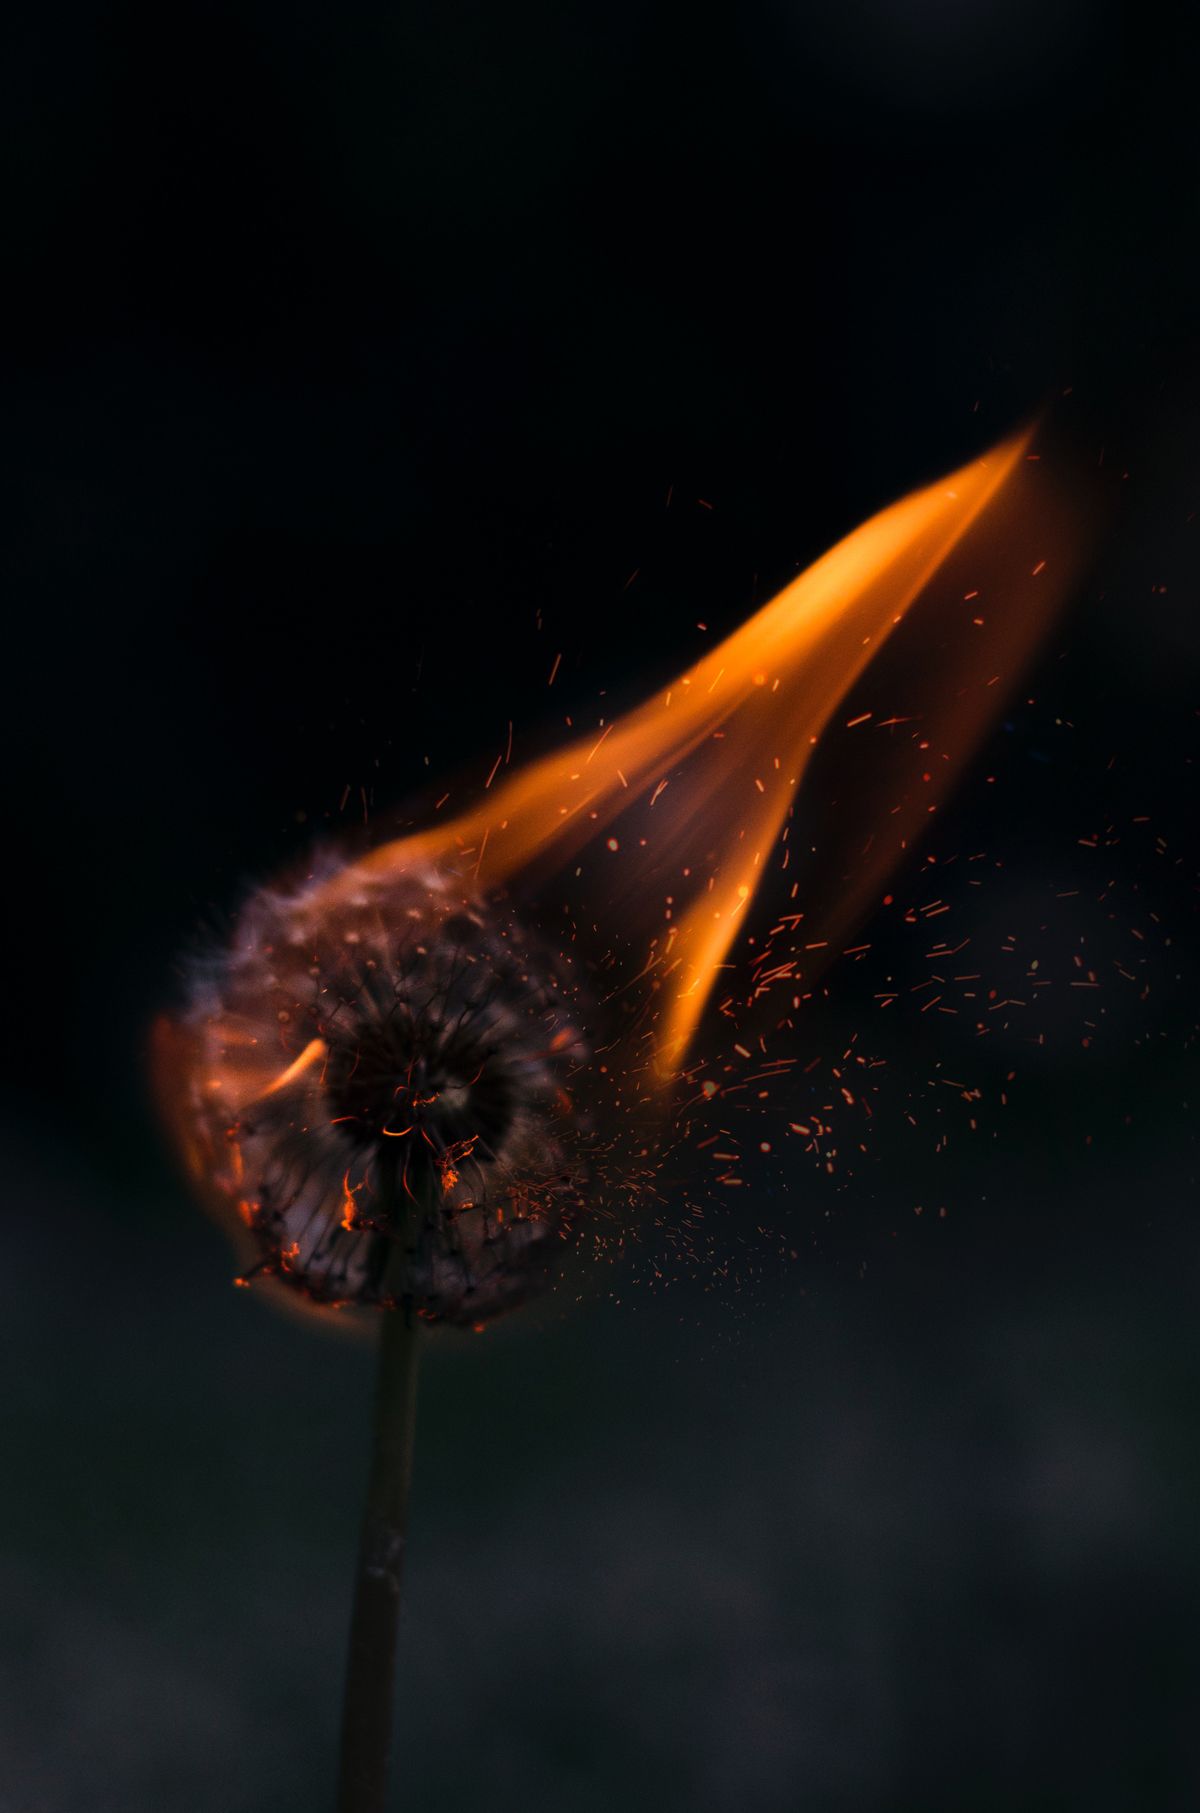 A dandelion on fire with sparks flying - Dark orange, mental health, dark